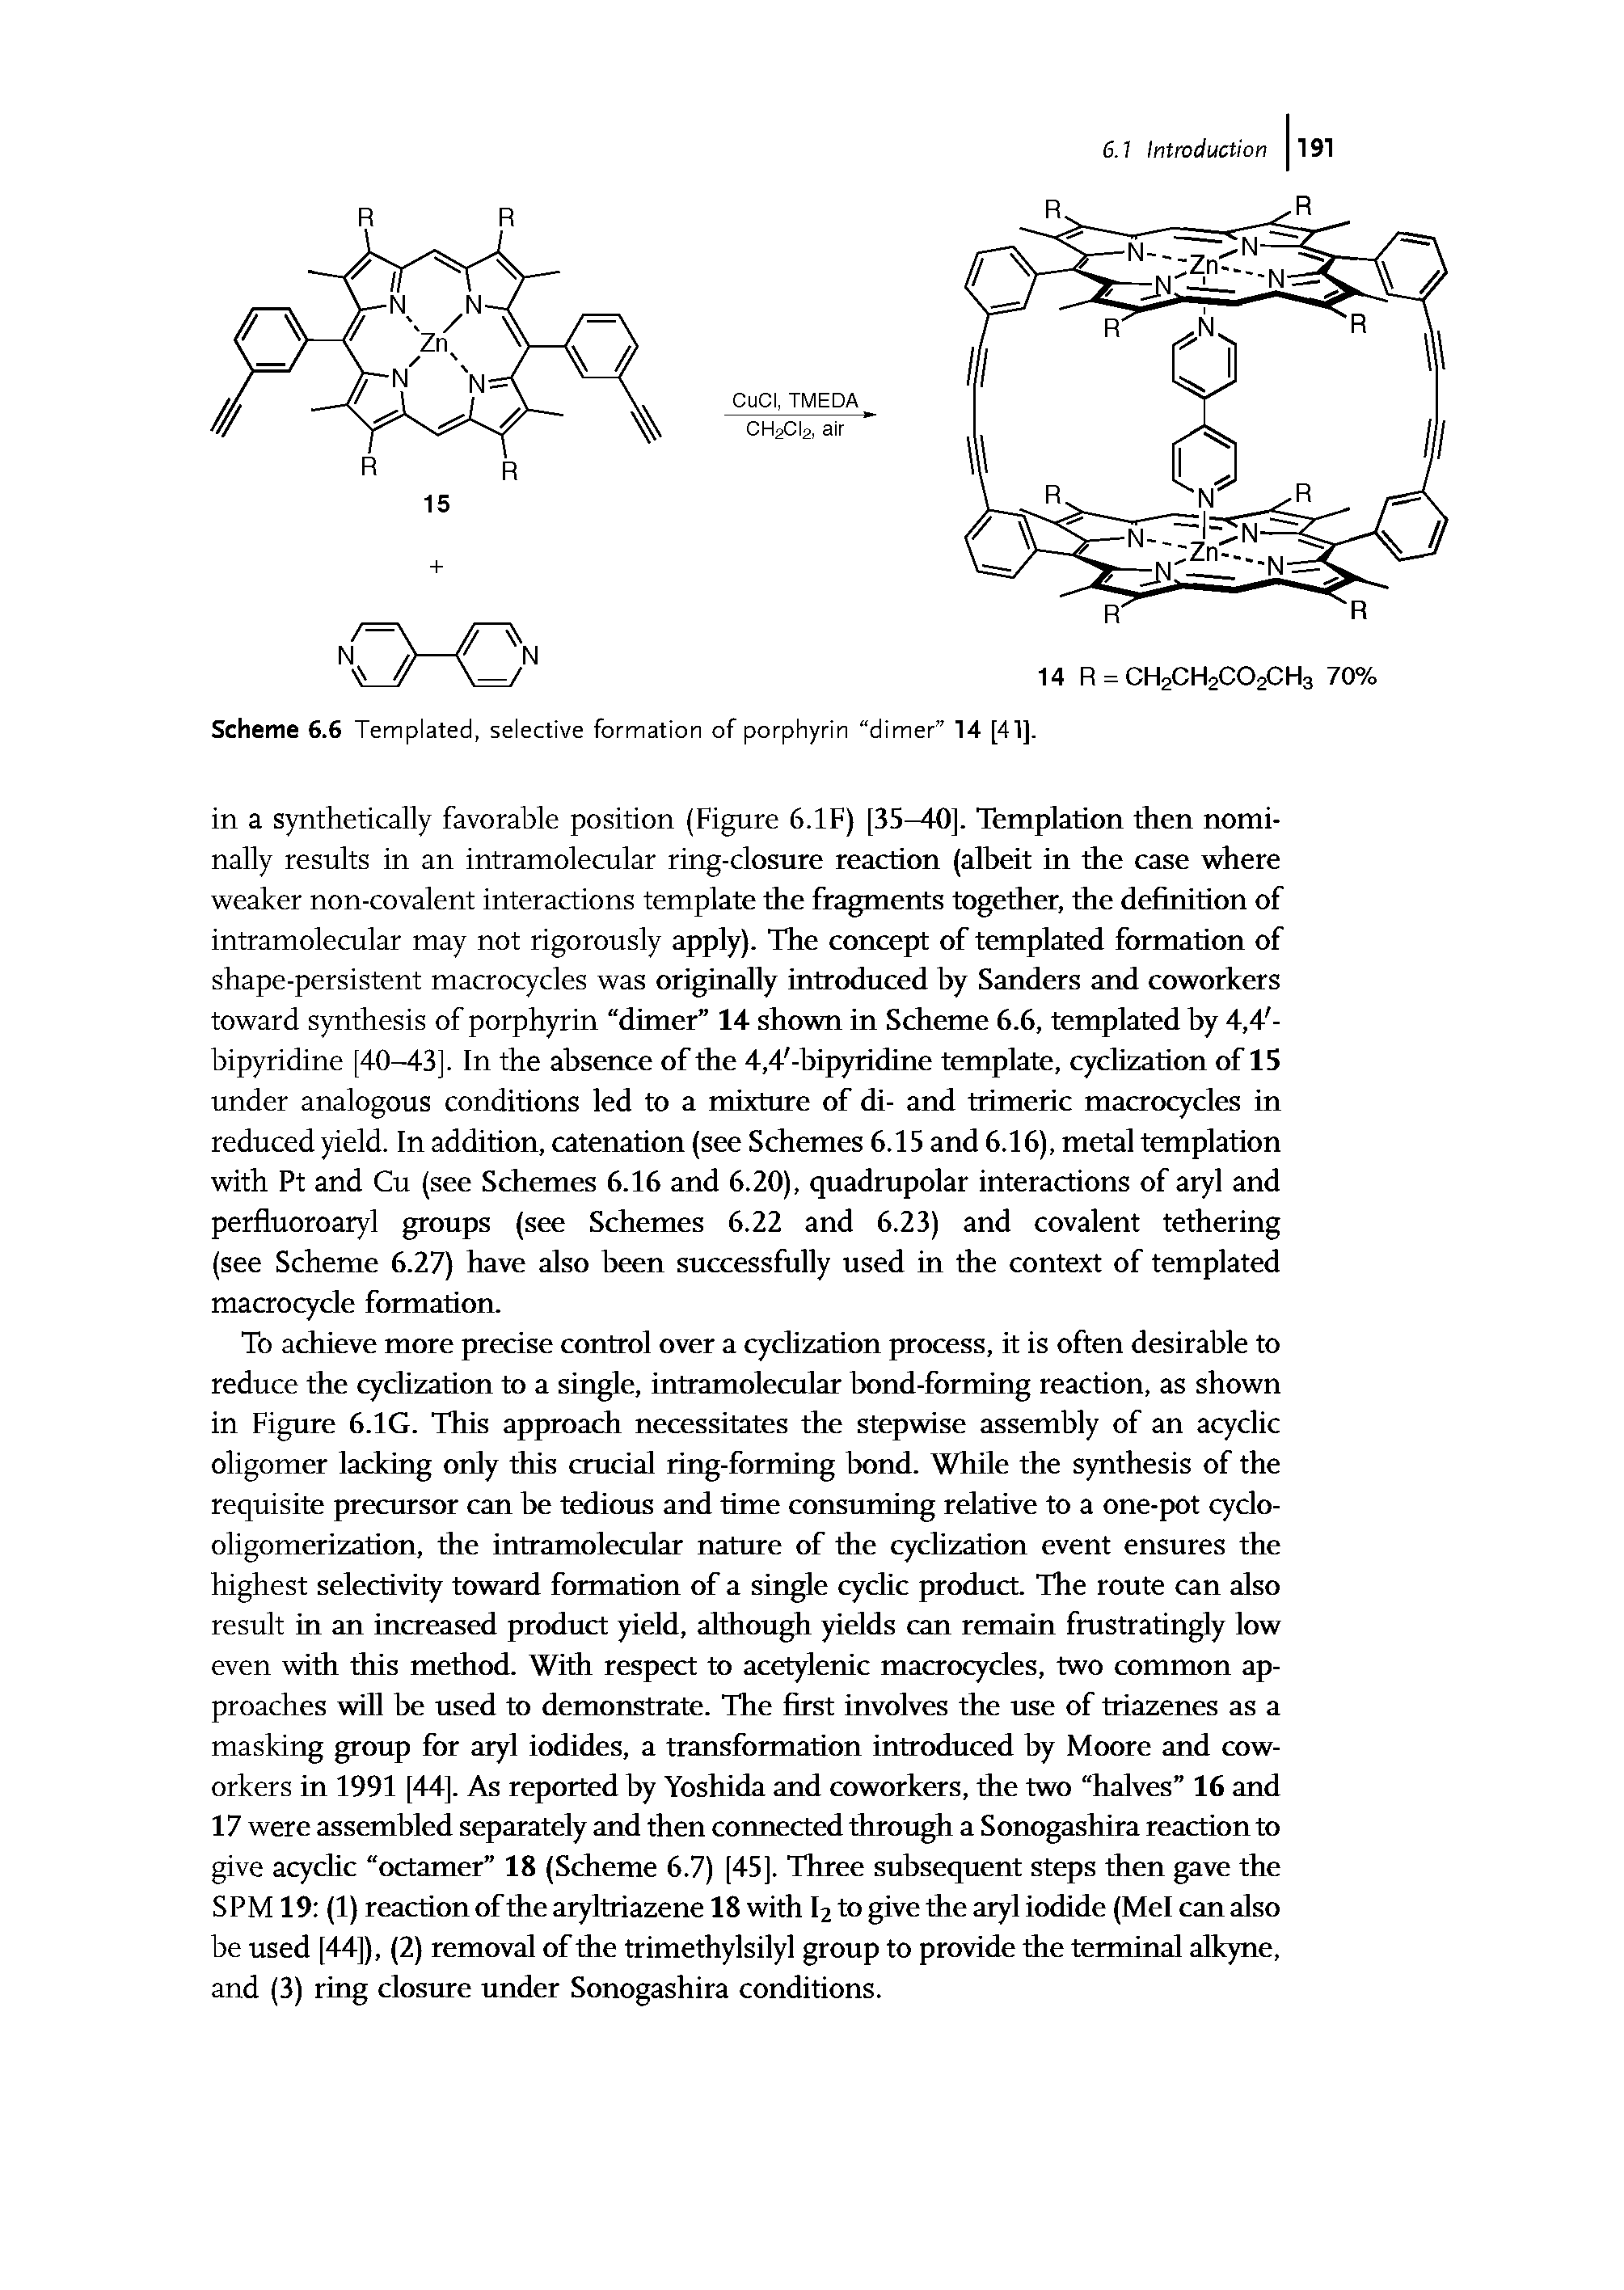 Scheme 6.6 Templated, selective formation of porphyrin dimer 14 [41].